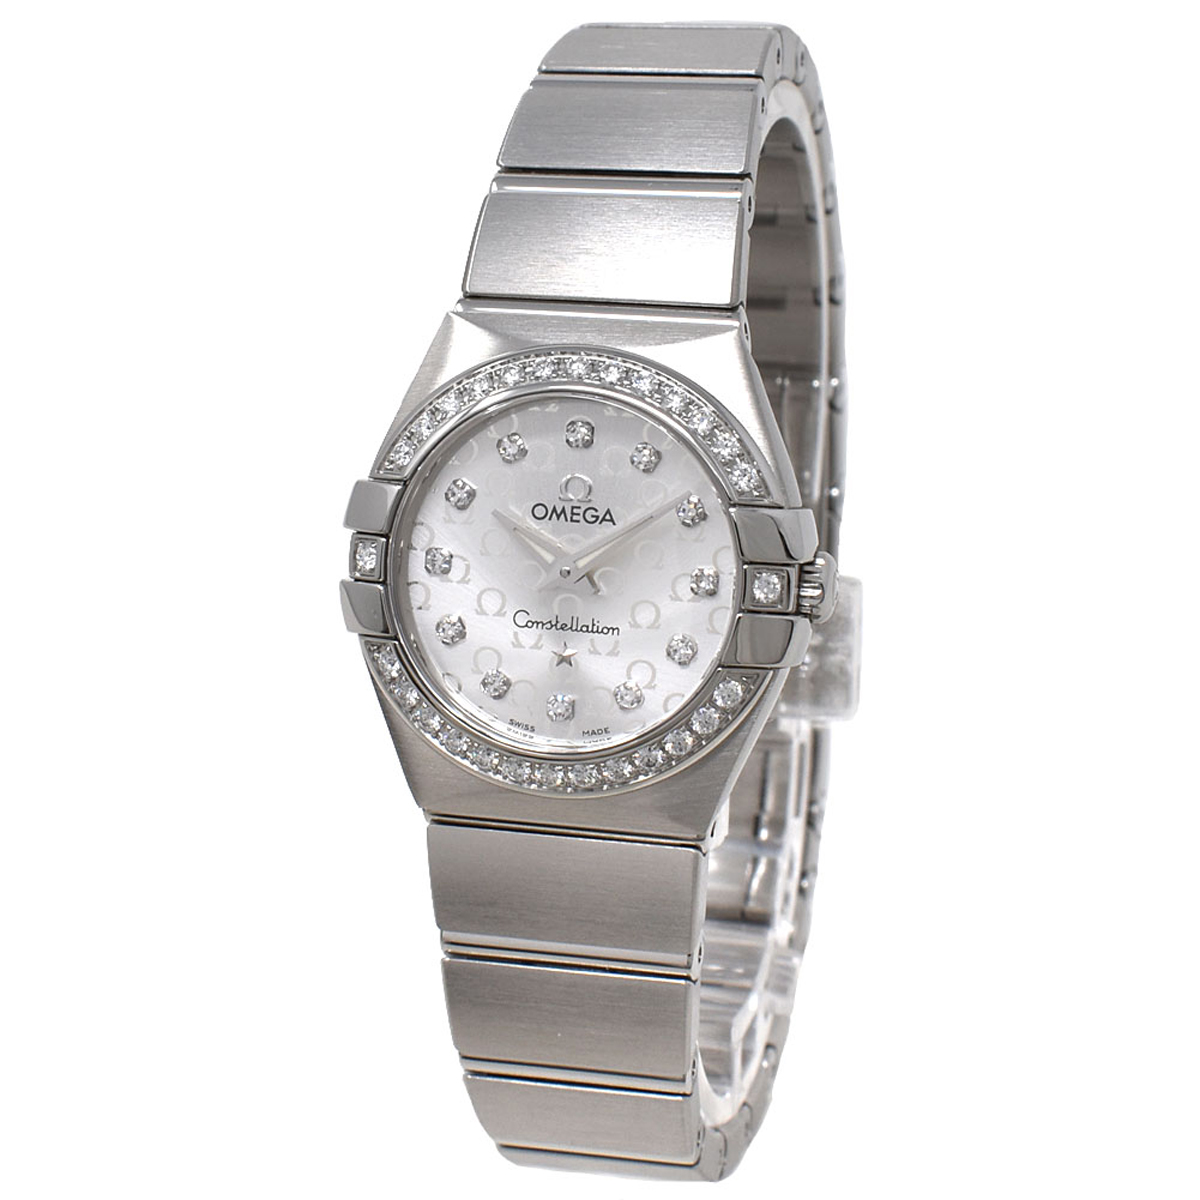 OMEGA オメガ 腕時計 コンステレーション ブラッシュ ダイヤモンド 123.15.24.60.52.001 レディース ウォッチ 海外正規品 シルバー 腕時